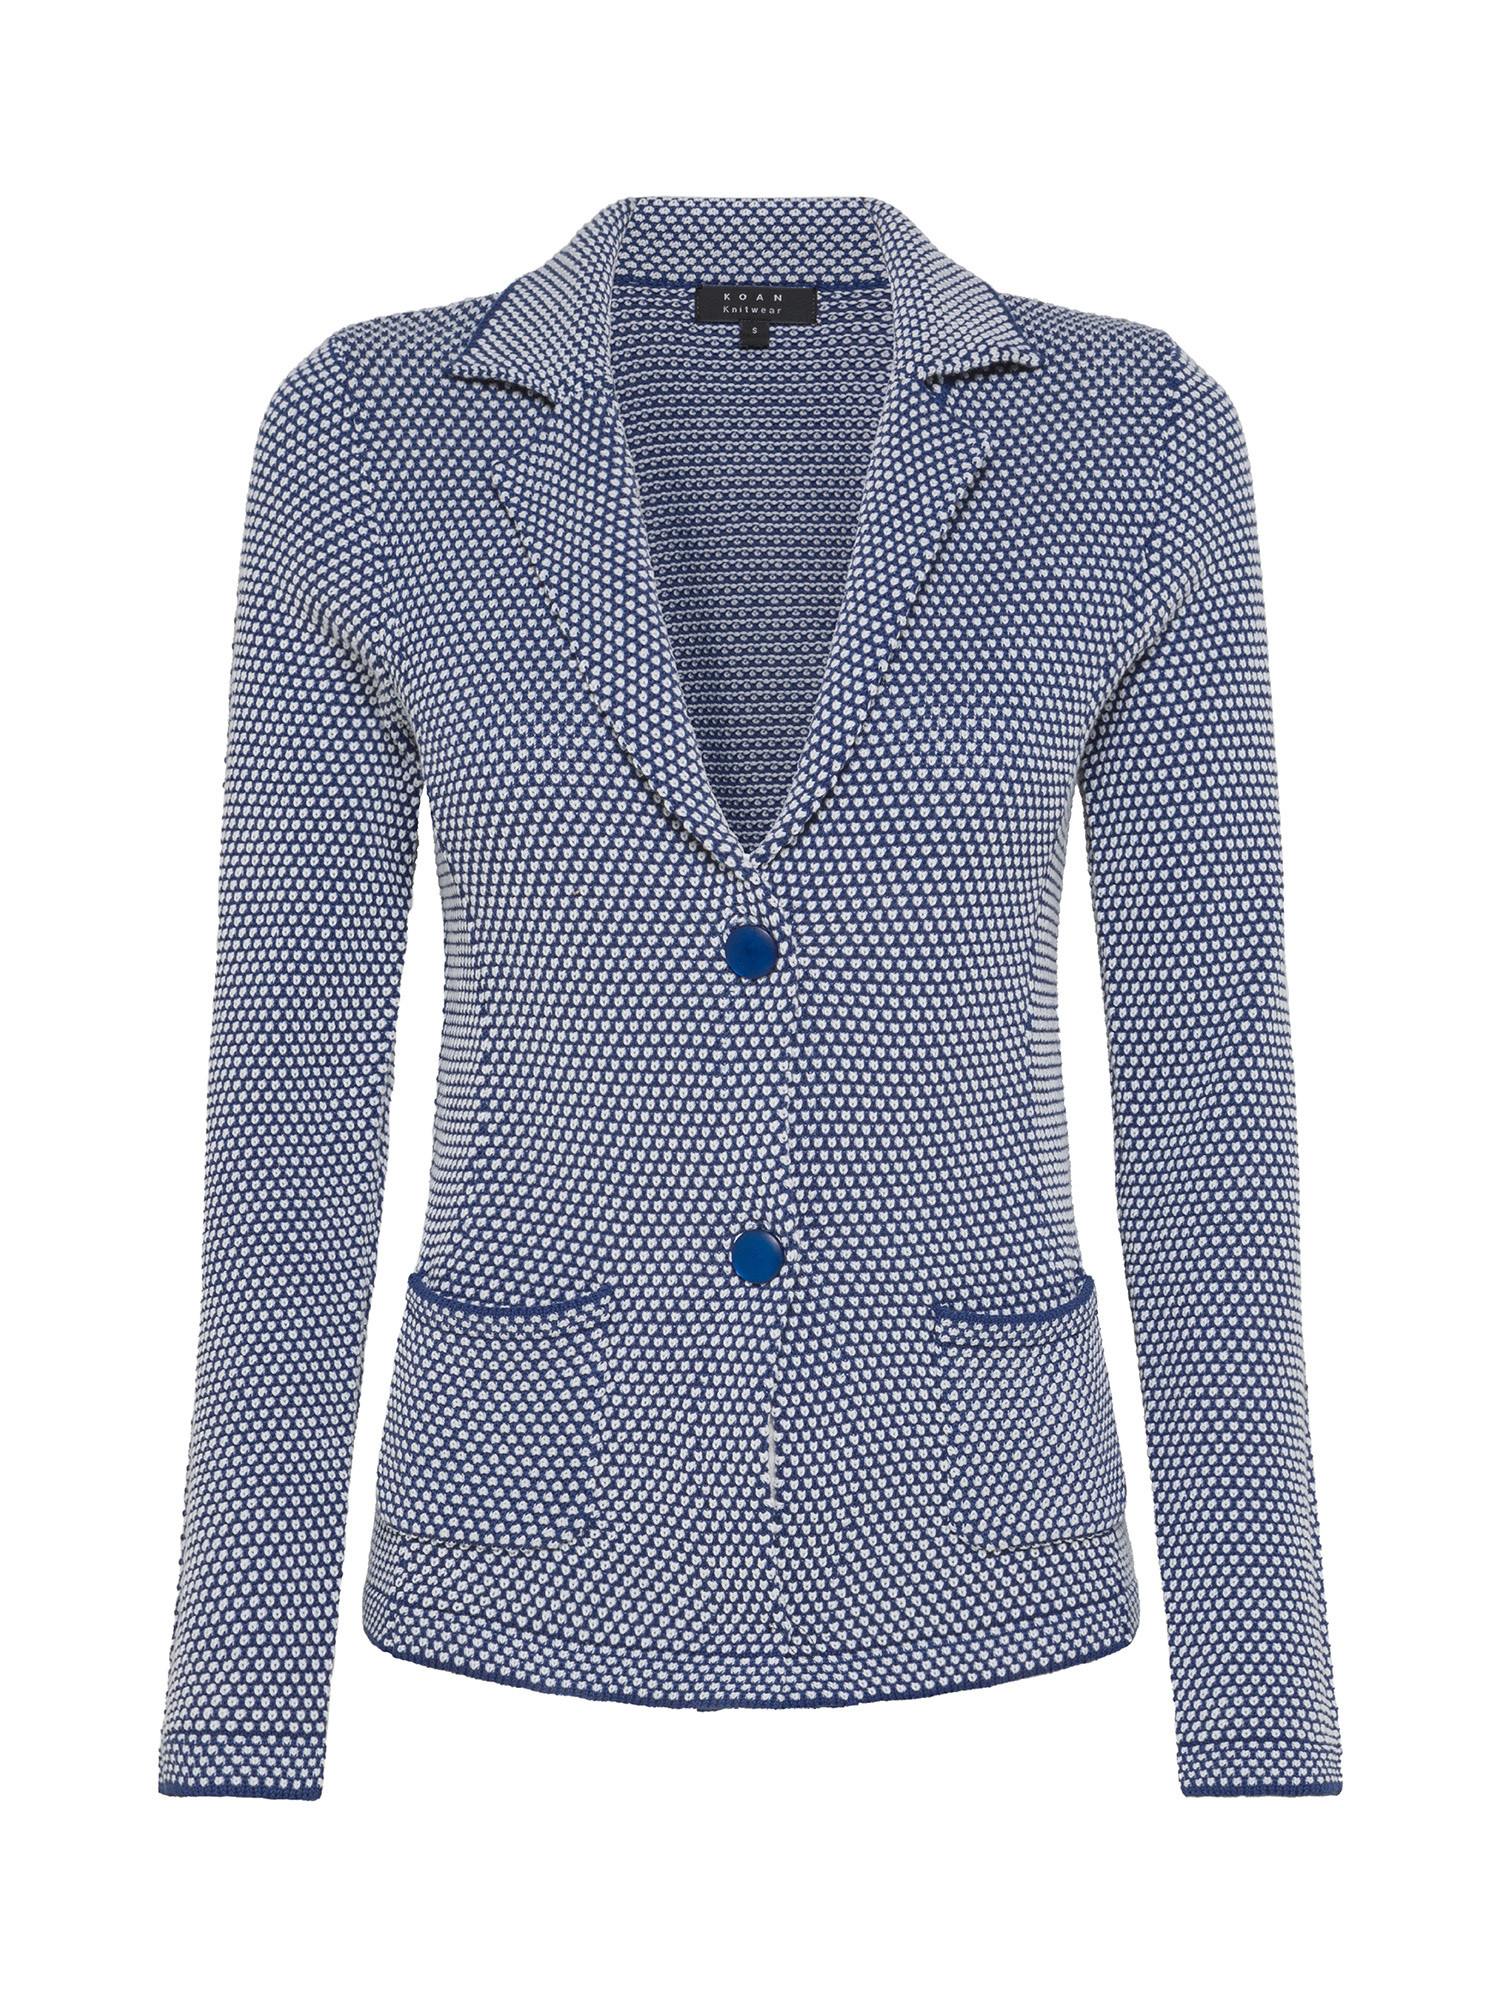 Koan - Bicolor rice stitch knit blazer in cotton, Blue, large image number 0